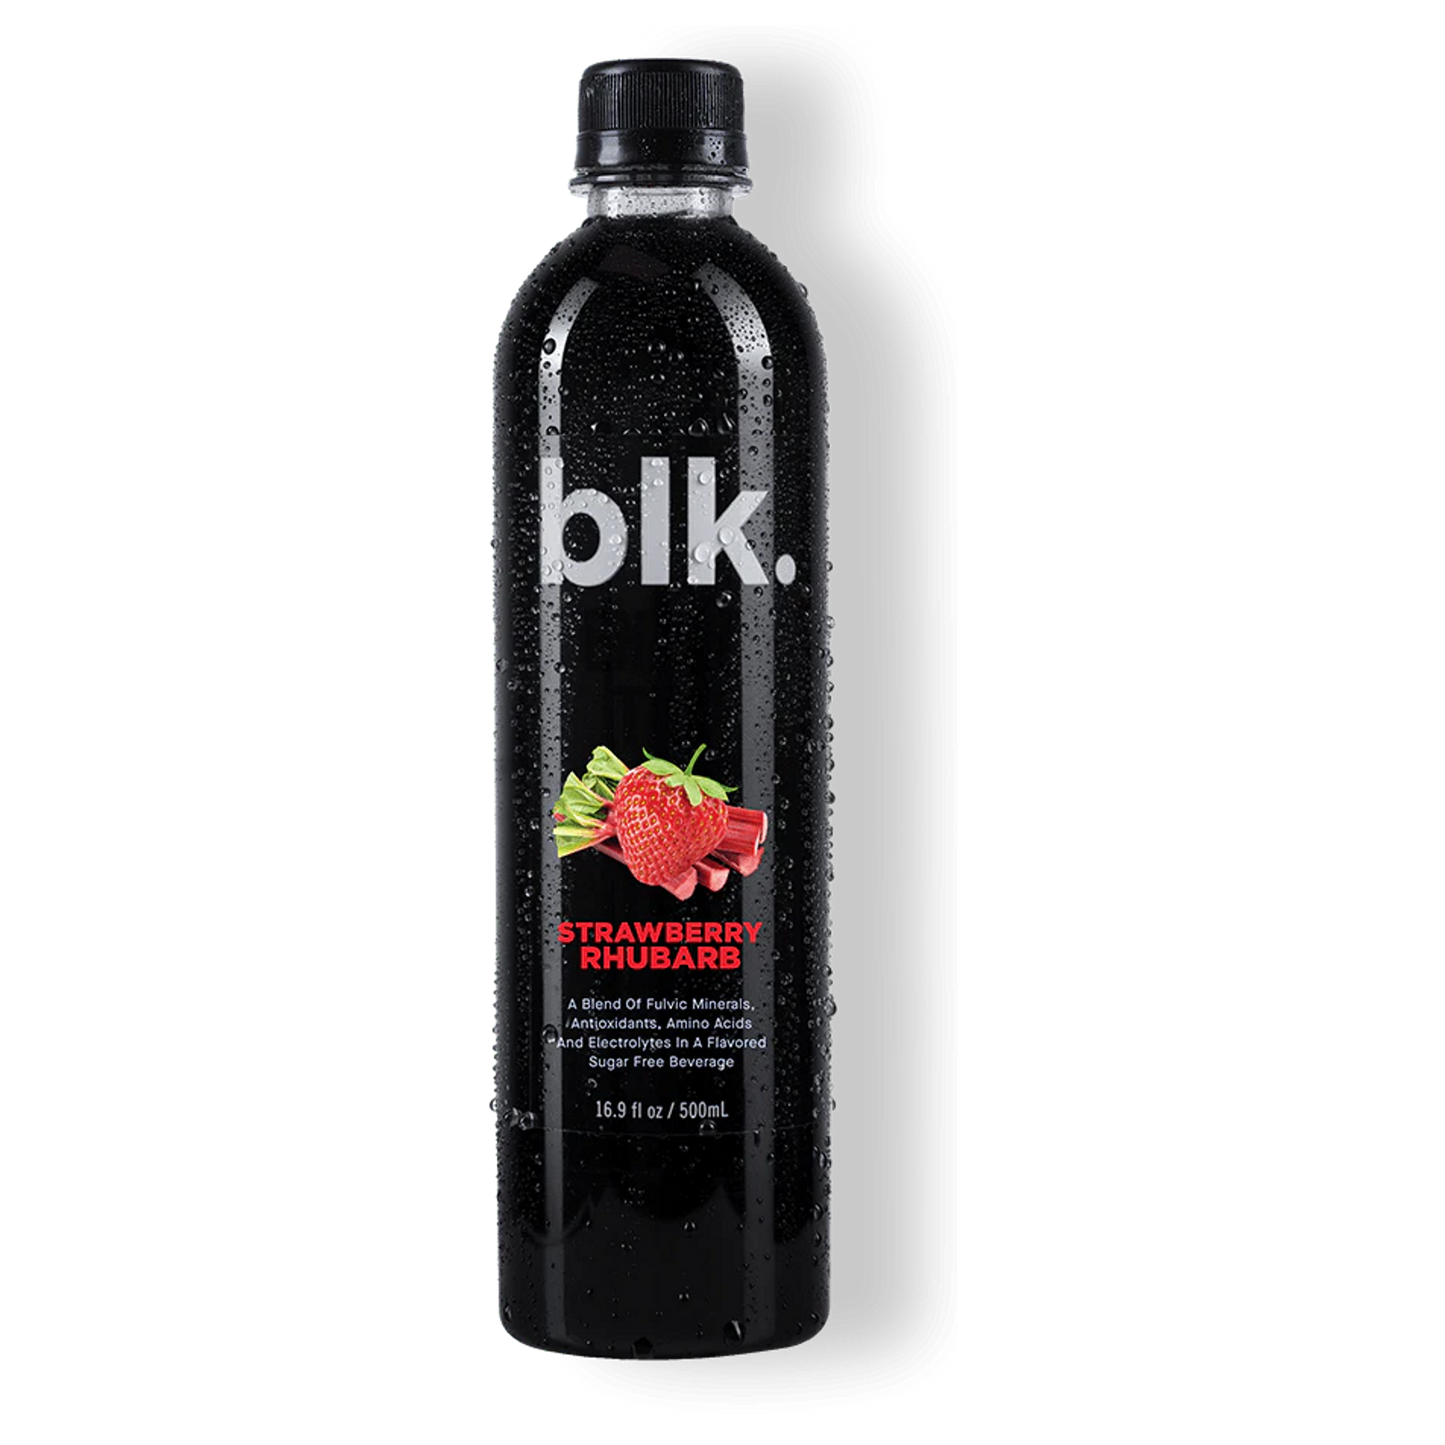 blk water strawberry rhubarb - blend of fulvic minerals, antioxidants, amino acids, electrolytes